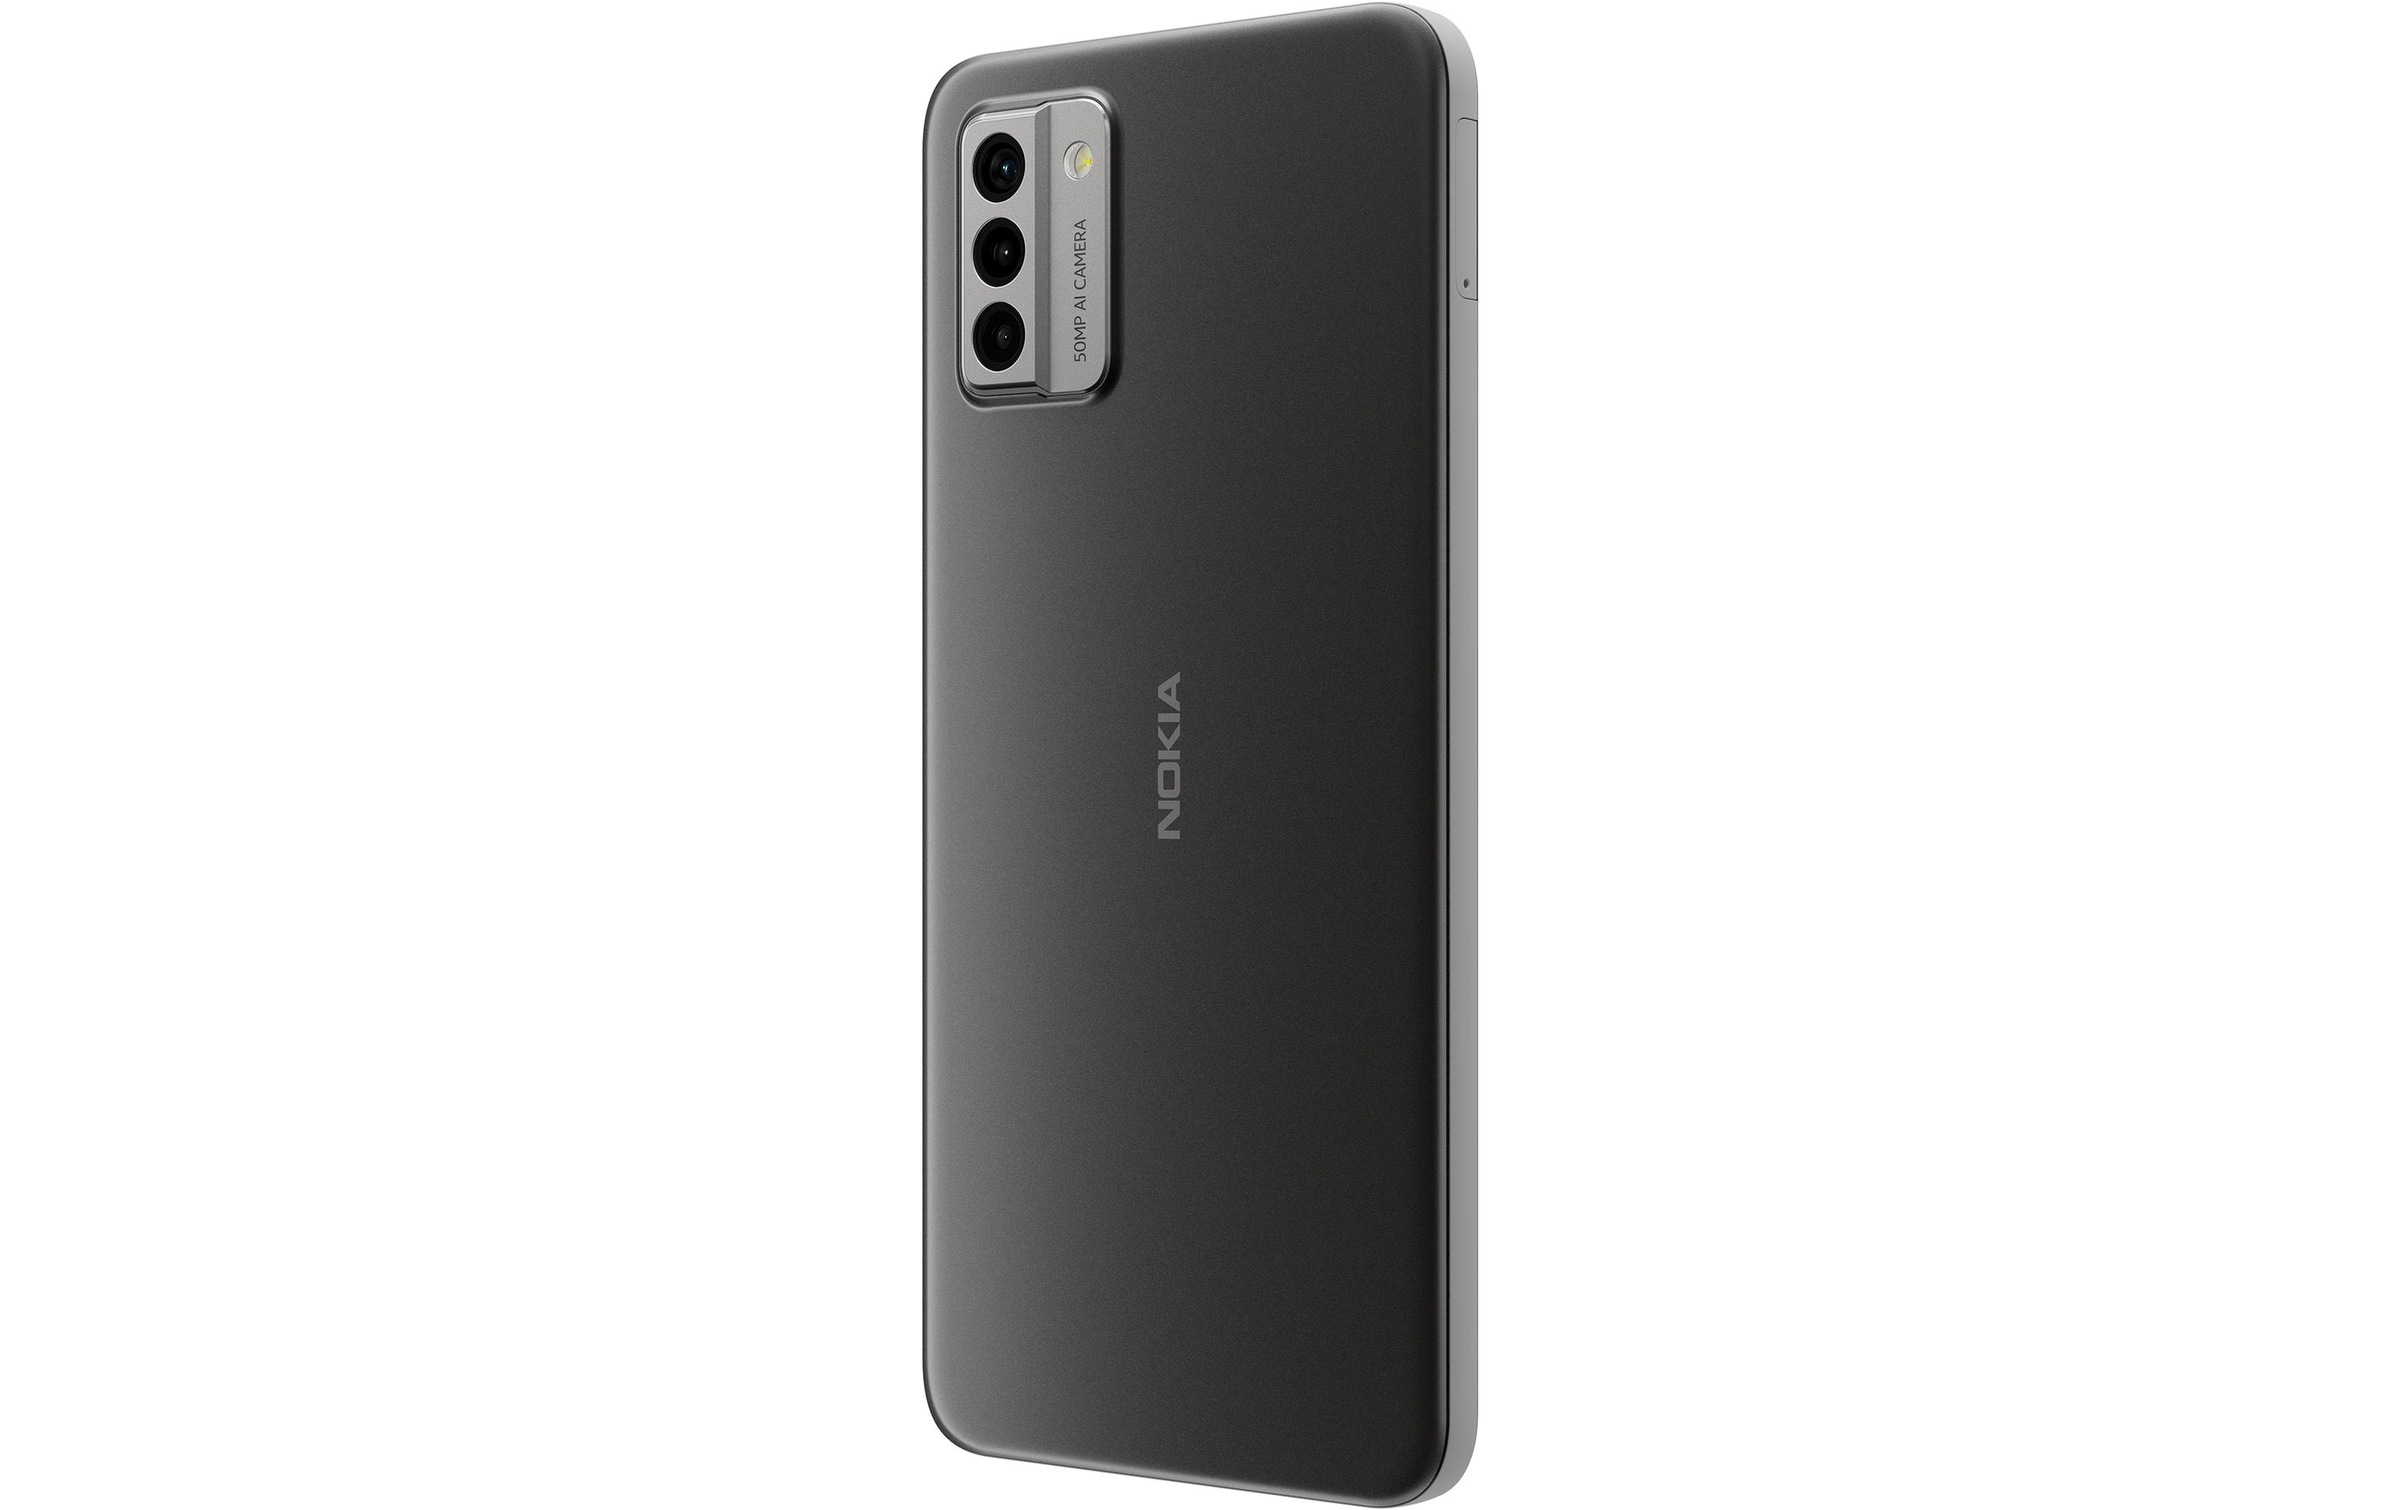 Nokia Smartphone »G22 64GB Meteor Grey«, Grau, 16,49 cm/6,52 Zoll, 64 GB Speicherplatz, 50 MP Kamera